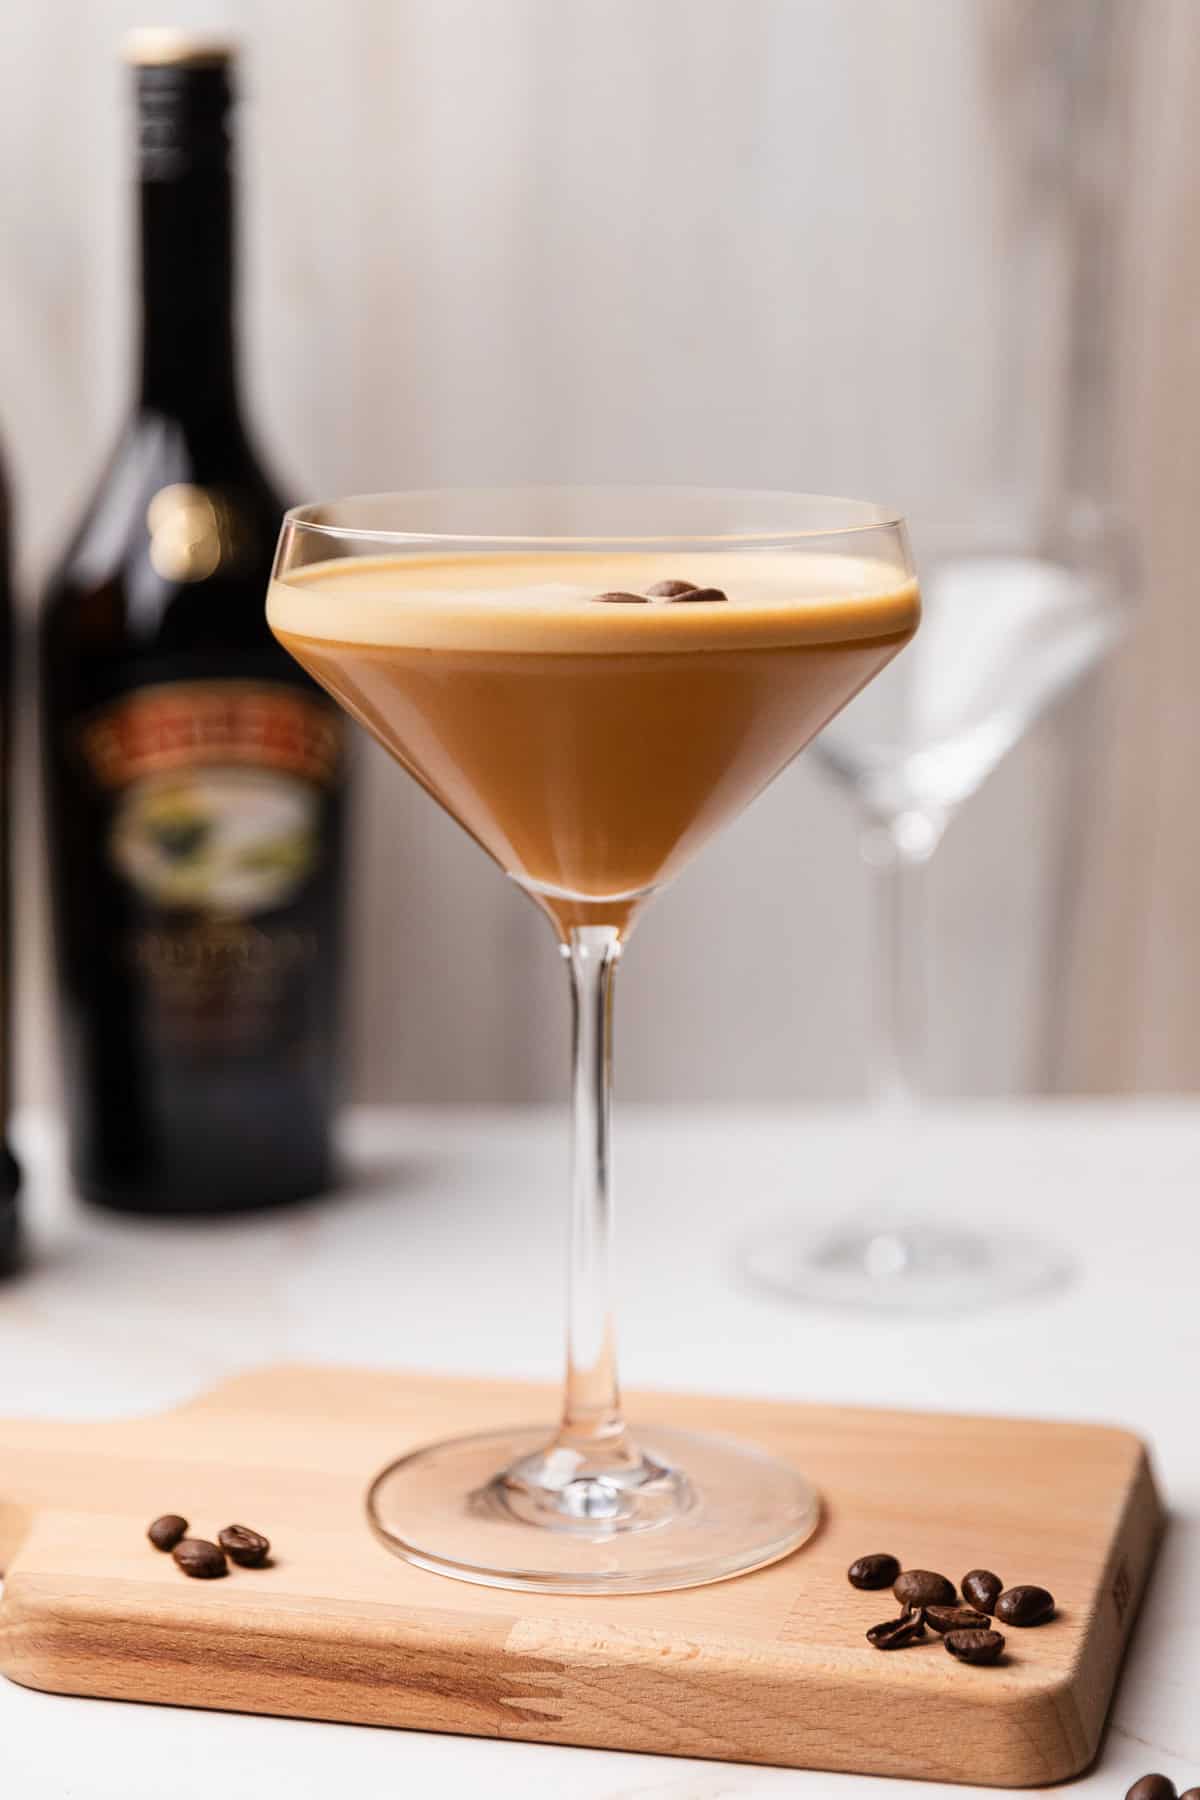 A creamy espresso martini with baileys.